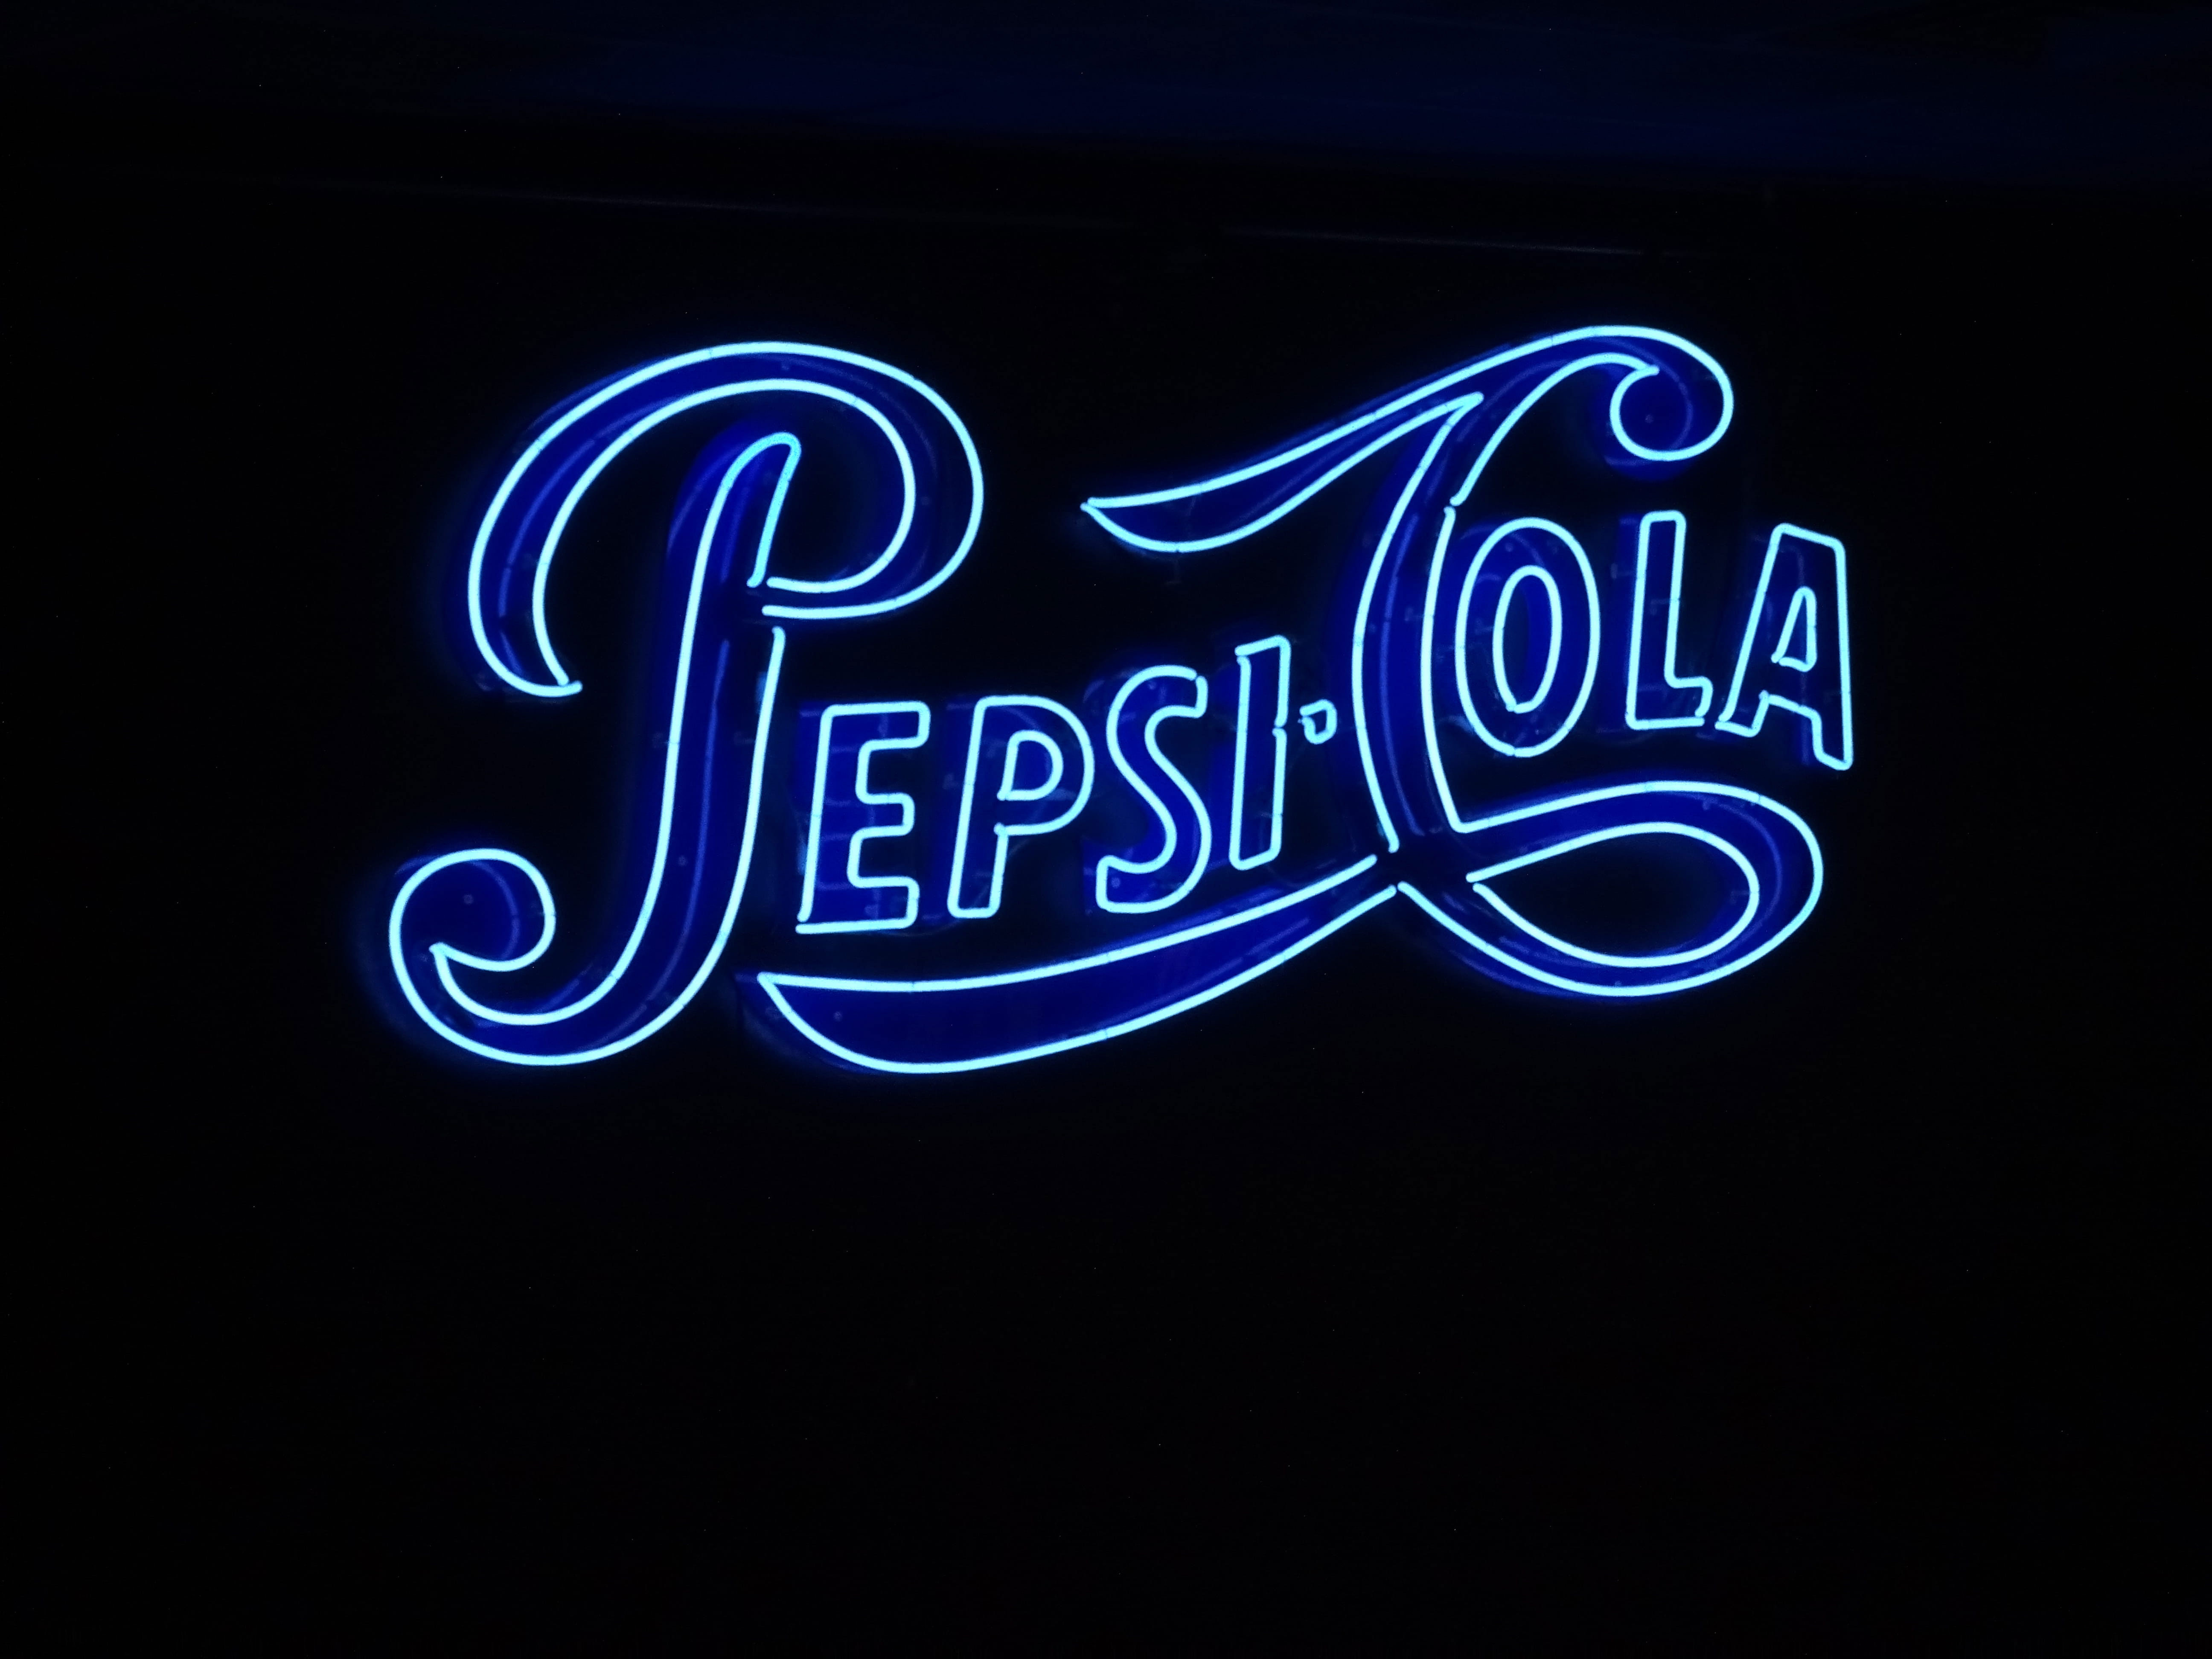 Wallpaper Pepsi Cola Signag, Text, Neon, Blue, Black, Black, Neon